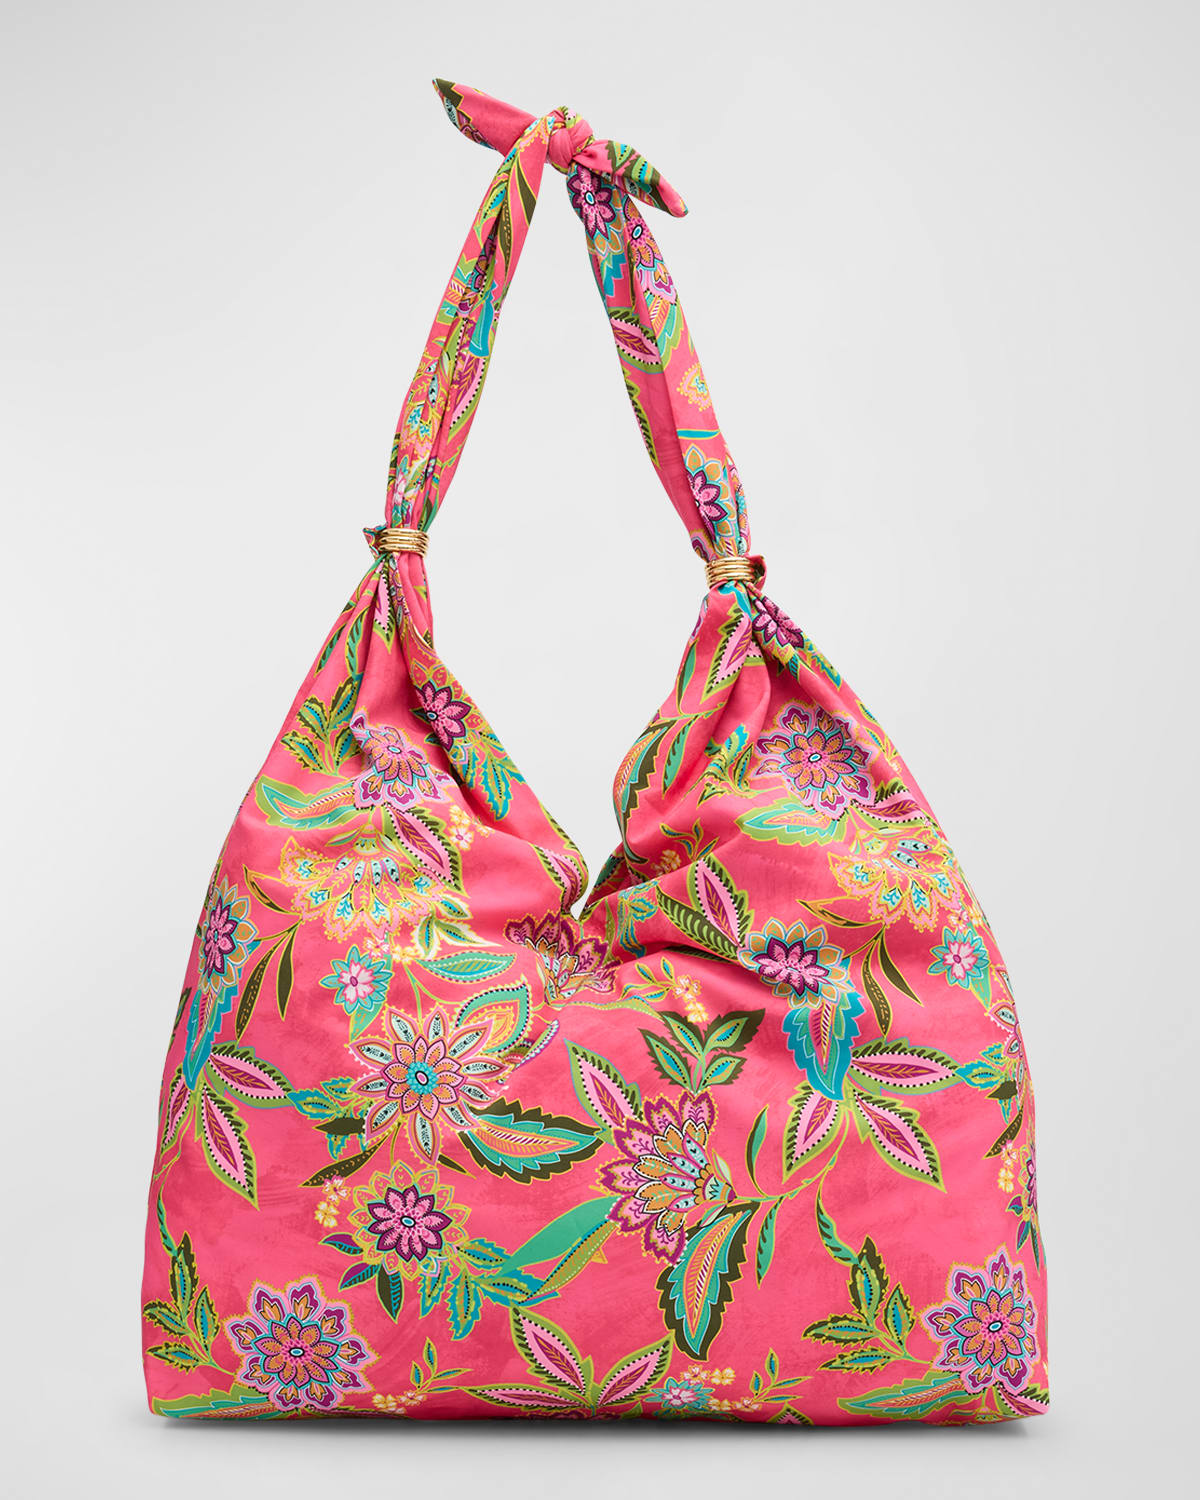 Flamingo Ring Beach Bag